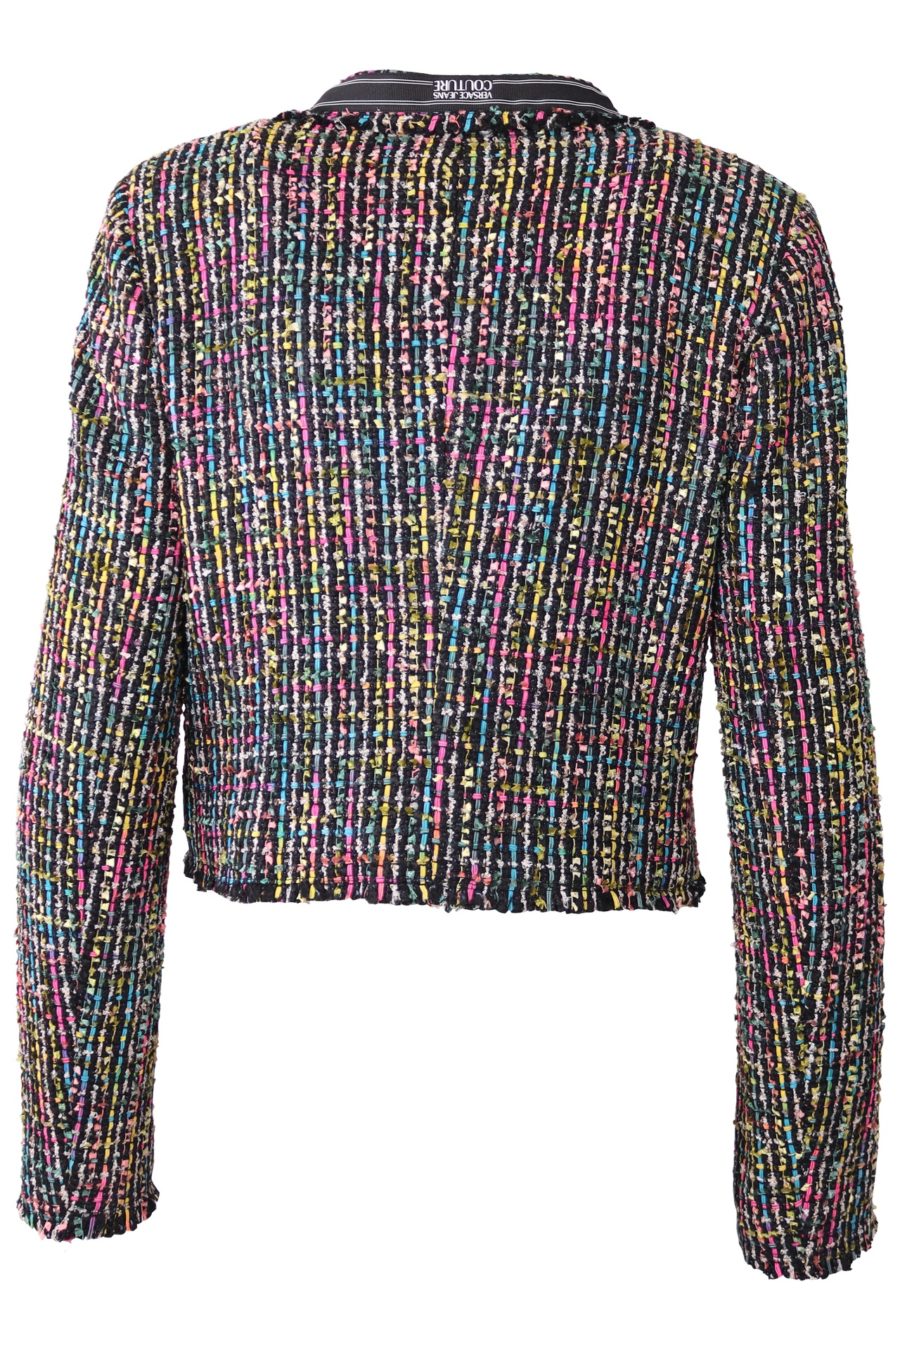 Chaqueta Versace Jeans Couture multicolor de tweed - f8ac7c993d829ac625a560b8b3d5b8a2f9fe7dc9